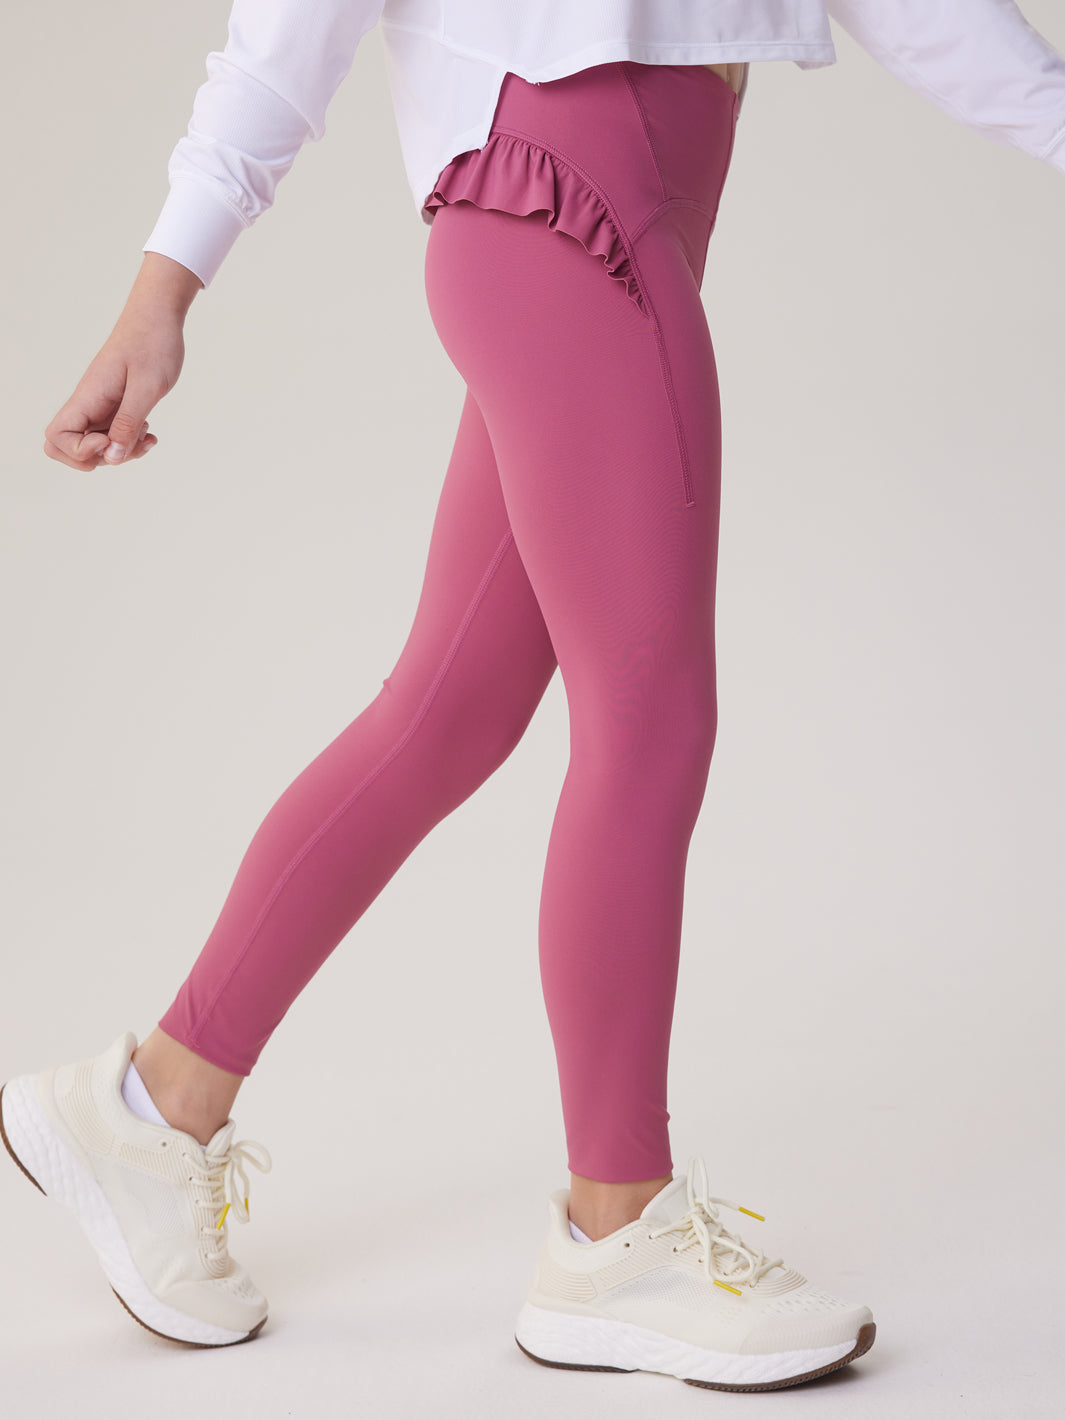 Girls Ruffle Skirt Leggings, Kids activewear, Yoga Dance Workout Pants,  Sport Leggings, 5 - 15 yrs – OUANDME